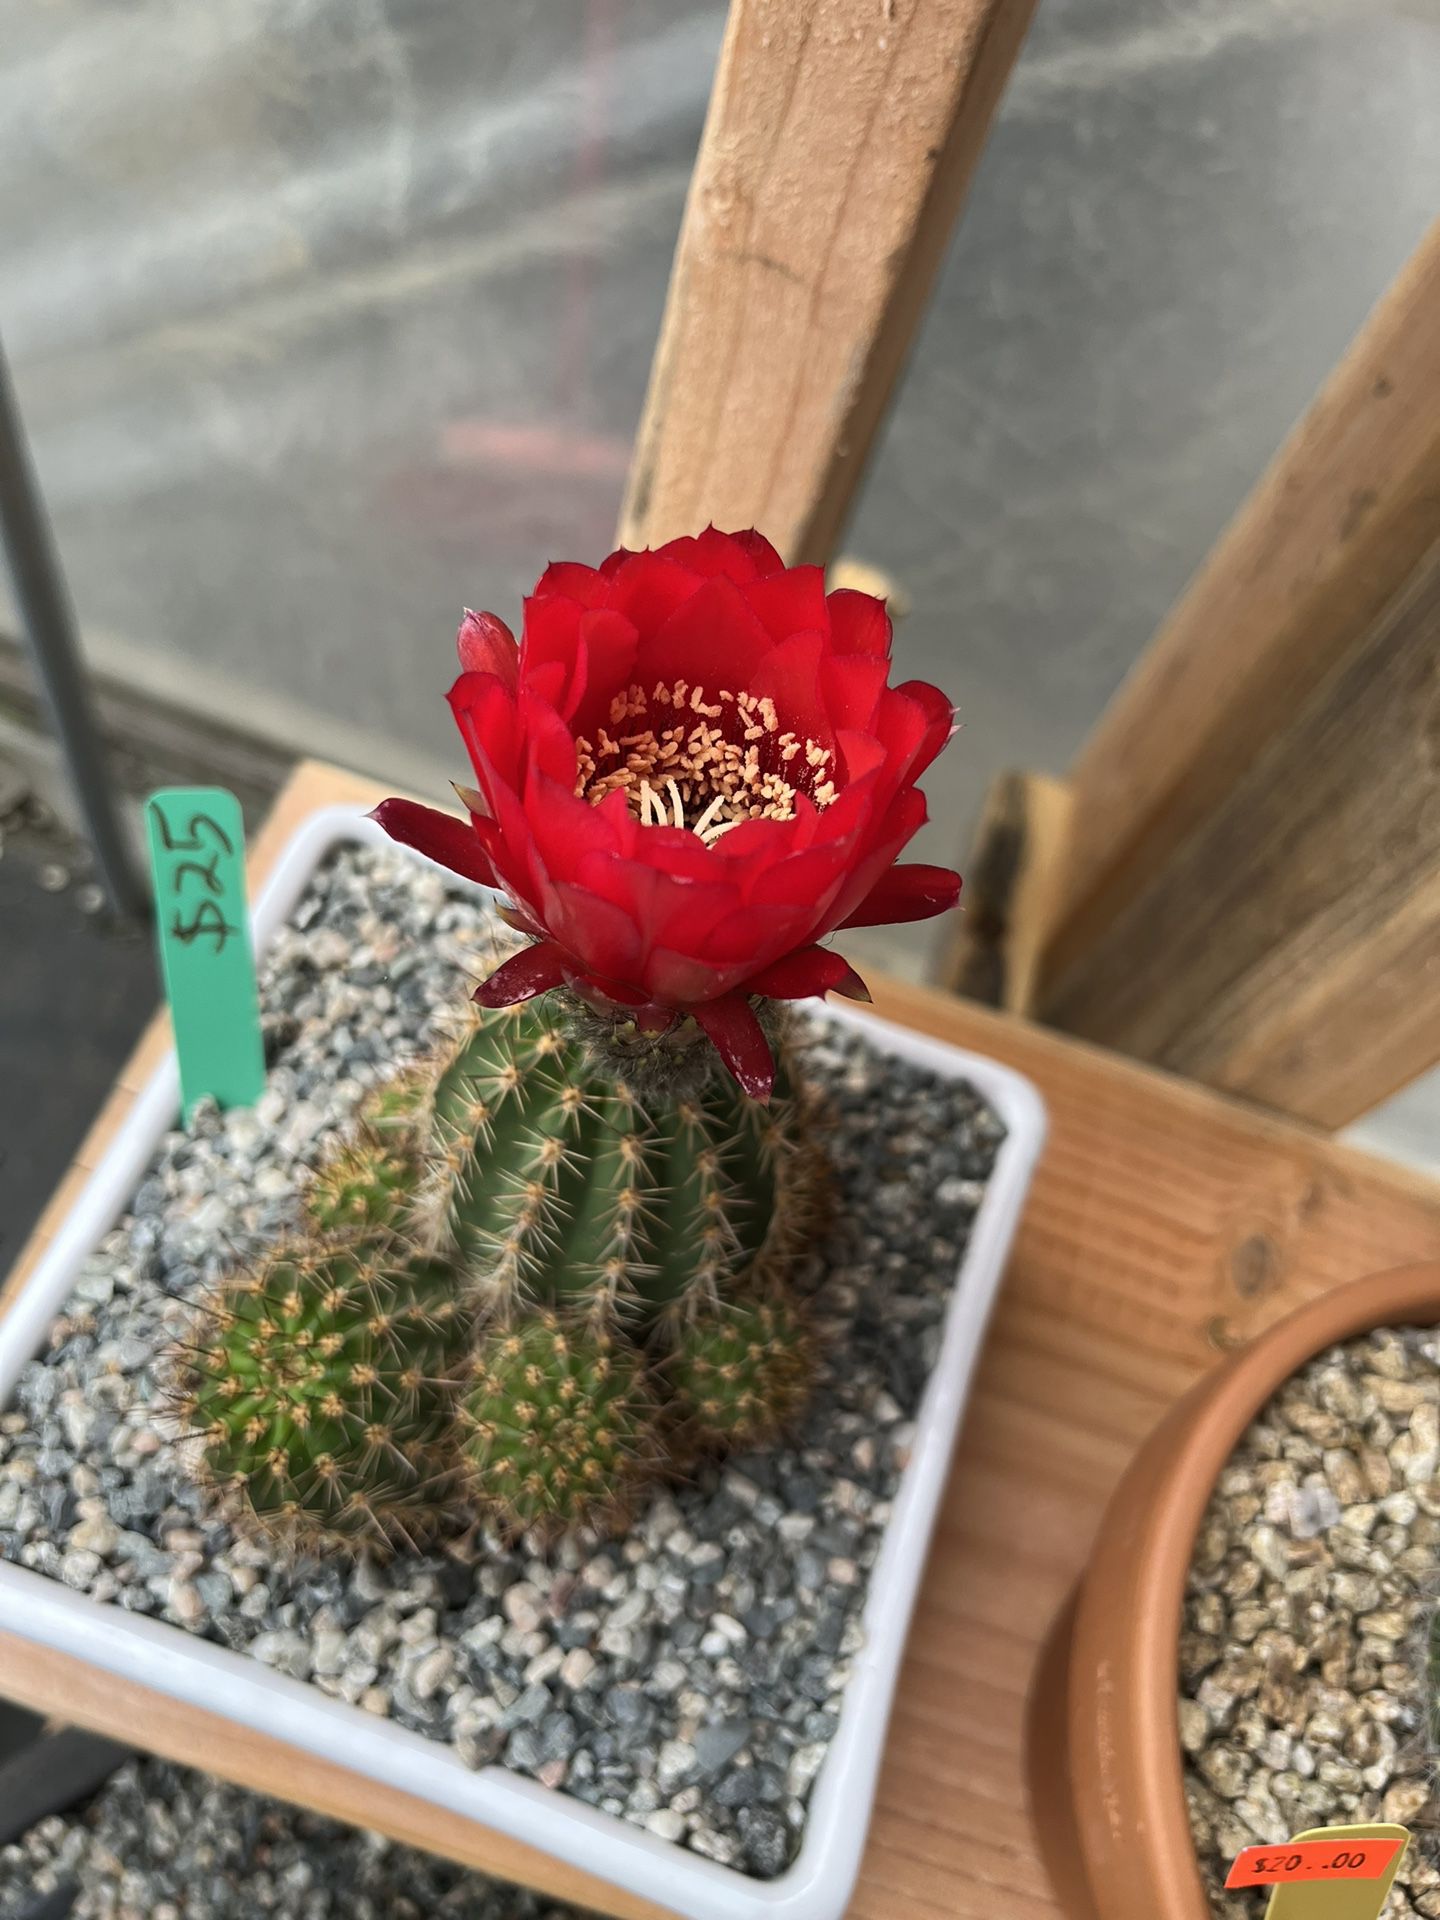 8” Cerámic Pot With Blooming Cactus $25